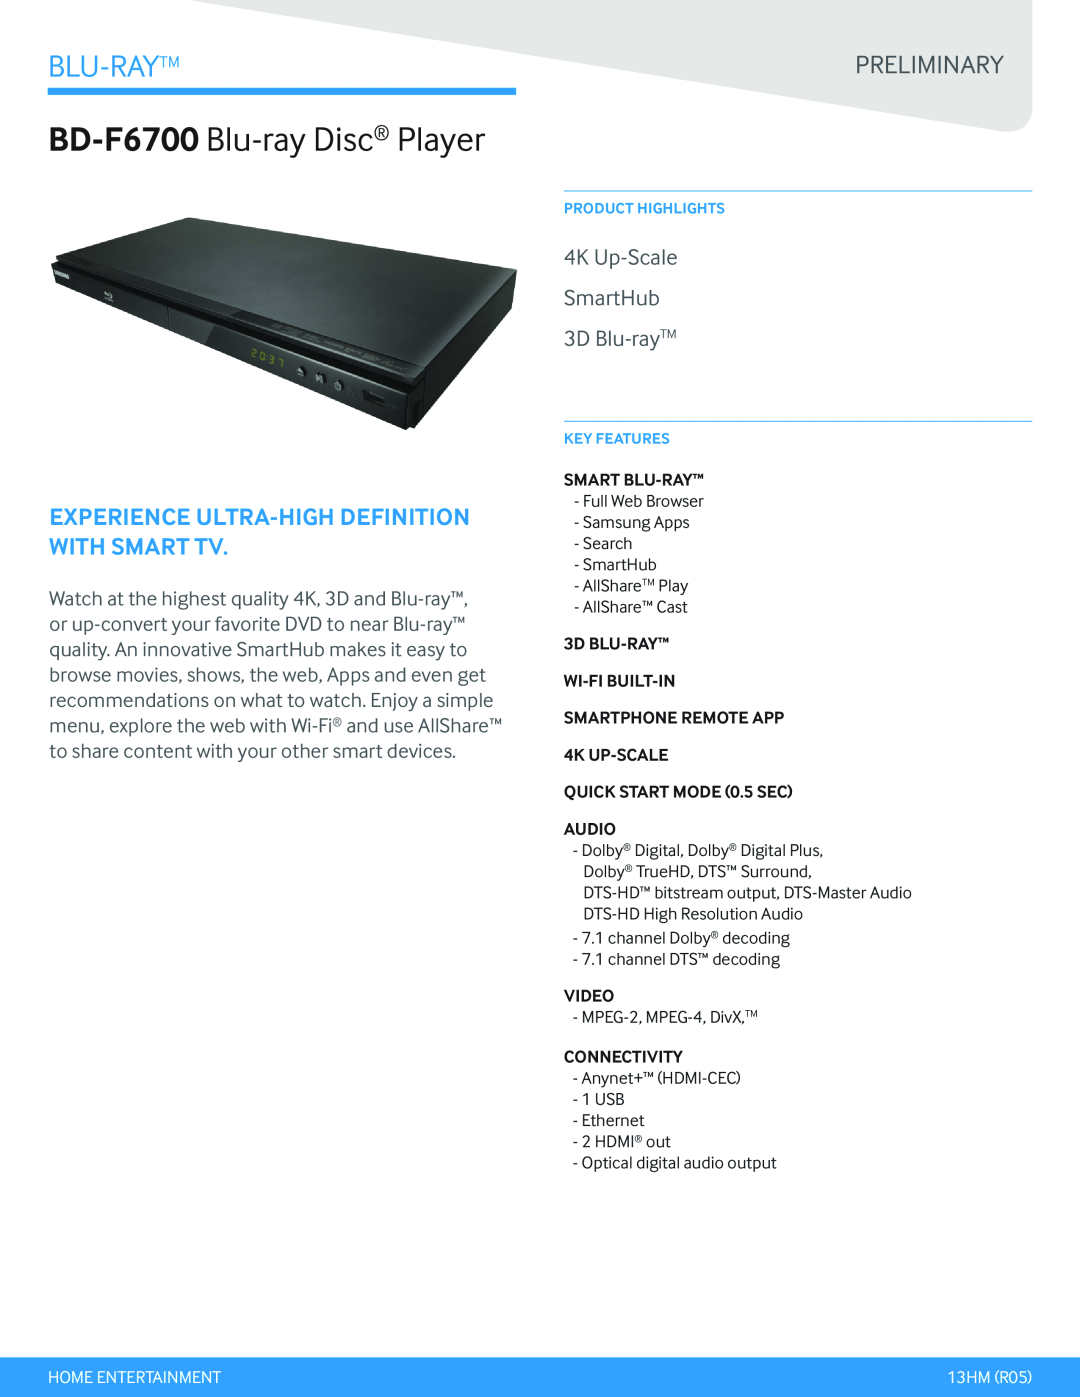 Samsung quick start BD-F6700 Blu-ray Disc Player, Blu-Raytm, Preliminary, 4K Up-Scale SmartHub 3D Blu-rayTM 